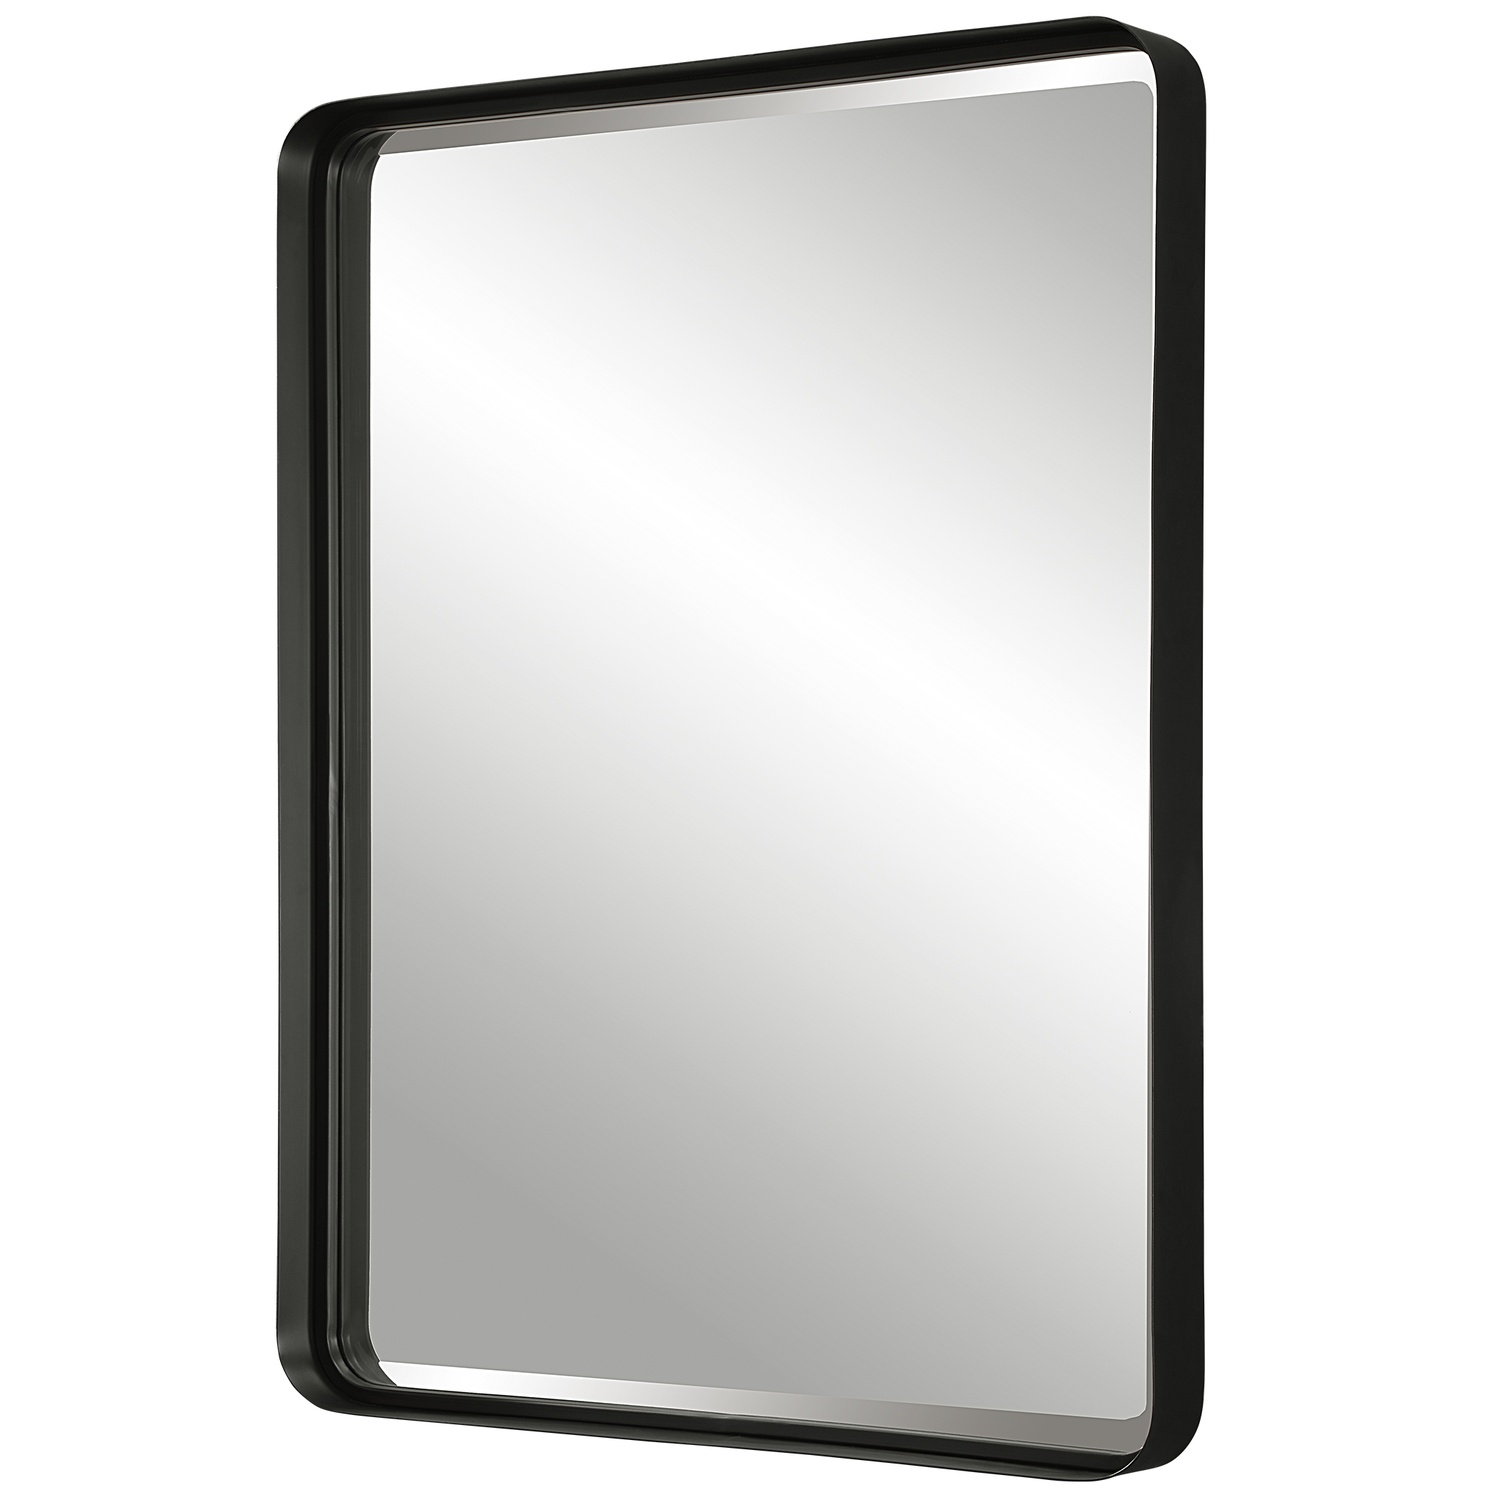 Crofton-Large Mirror